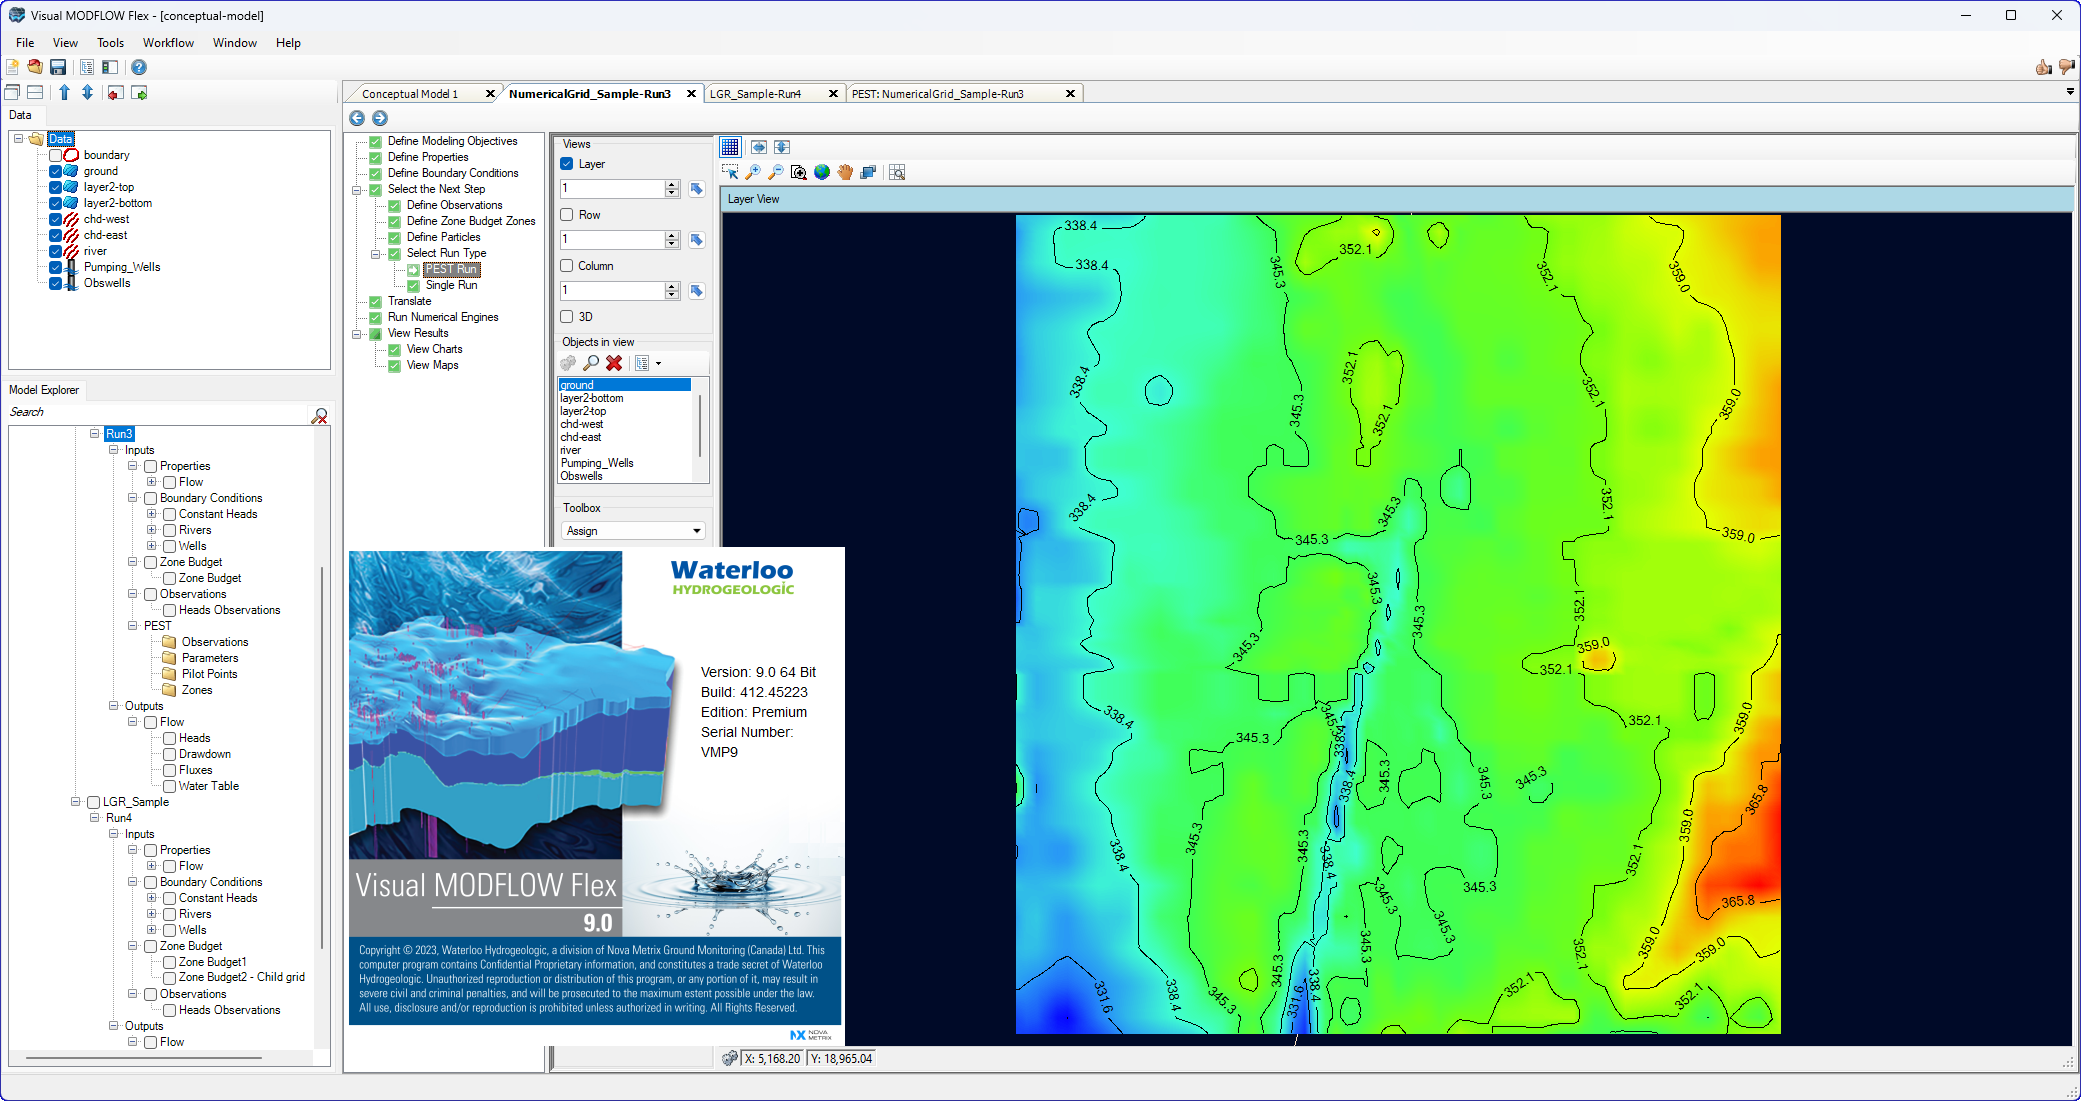 Working with Schlumberger Waterloo Hydrogeologic Visual MODFLOW Flex 9.0 full